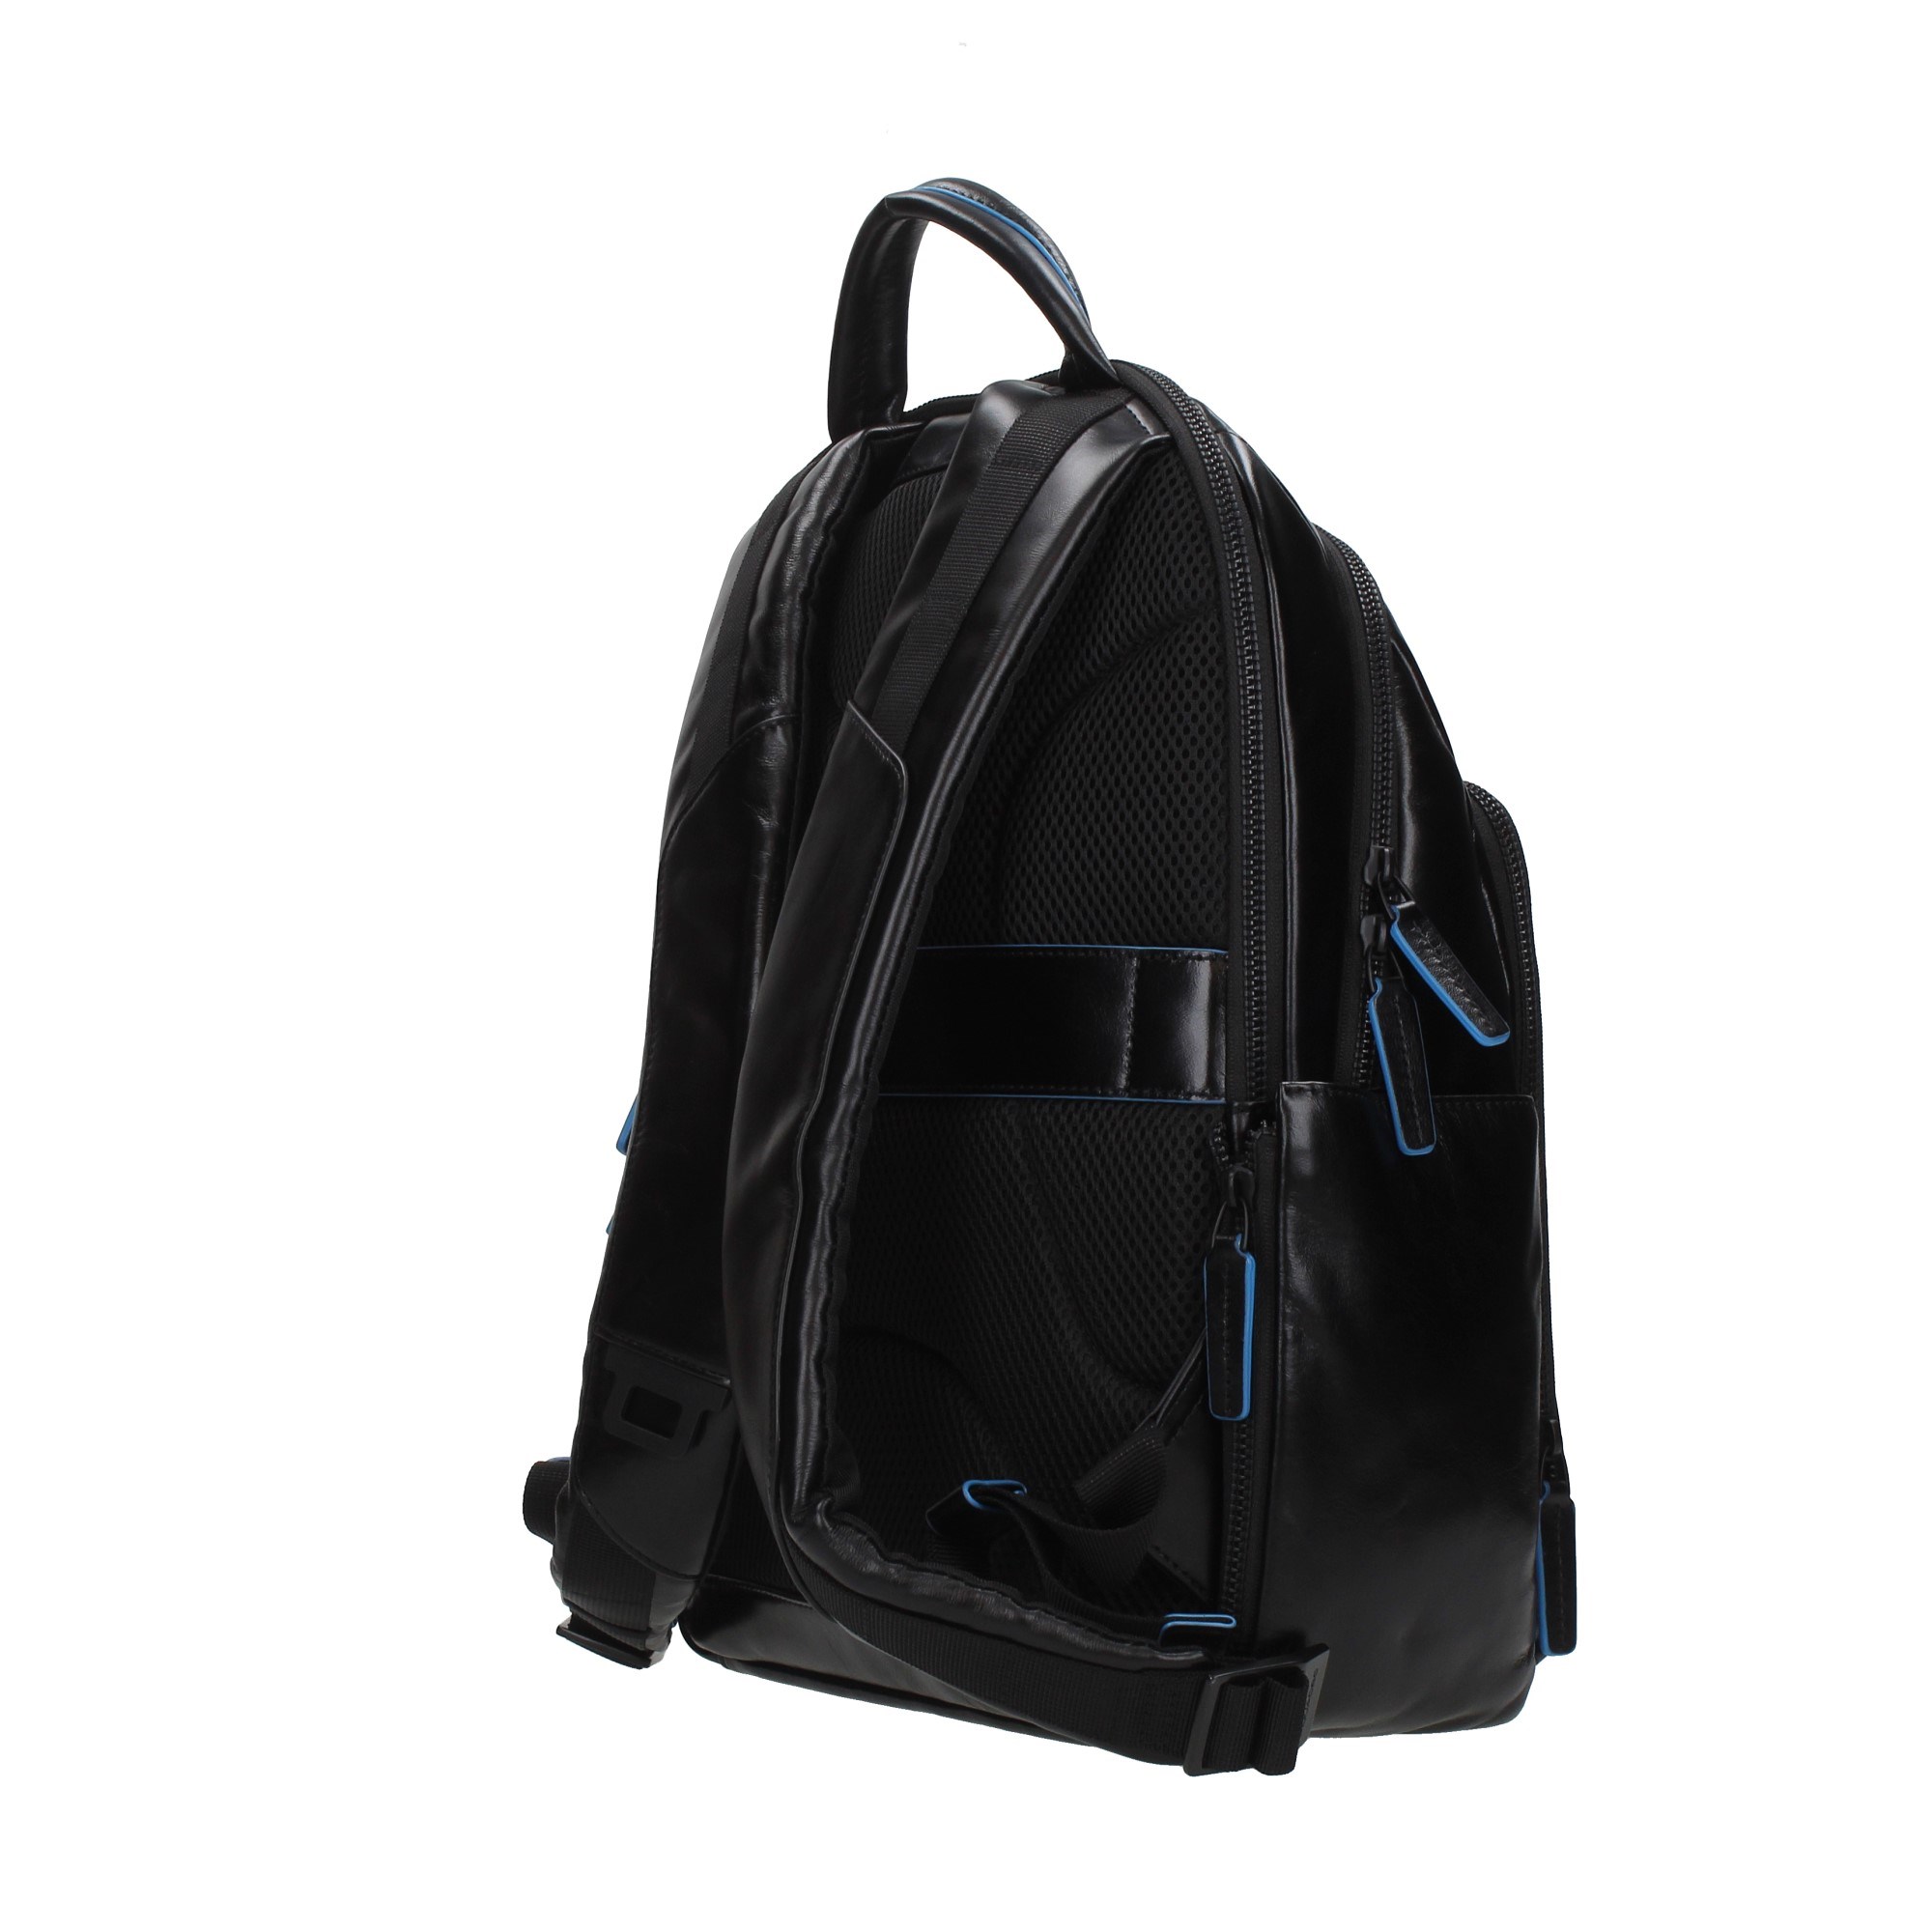 Piquadro. Accessories Man Backpack CA5574B2V/N